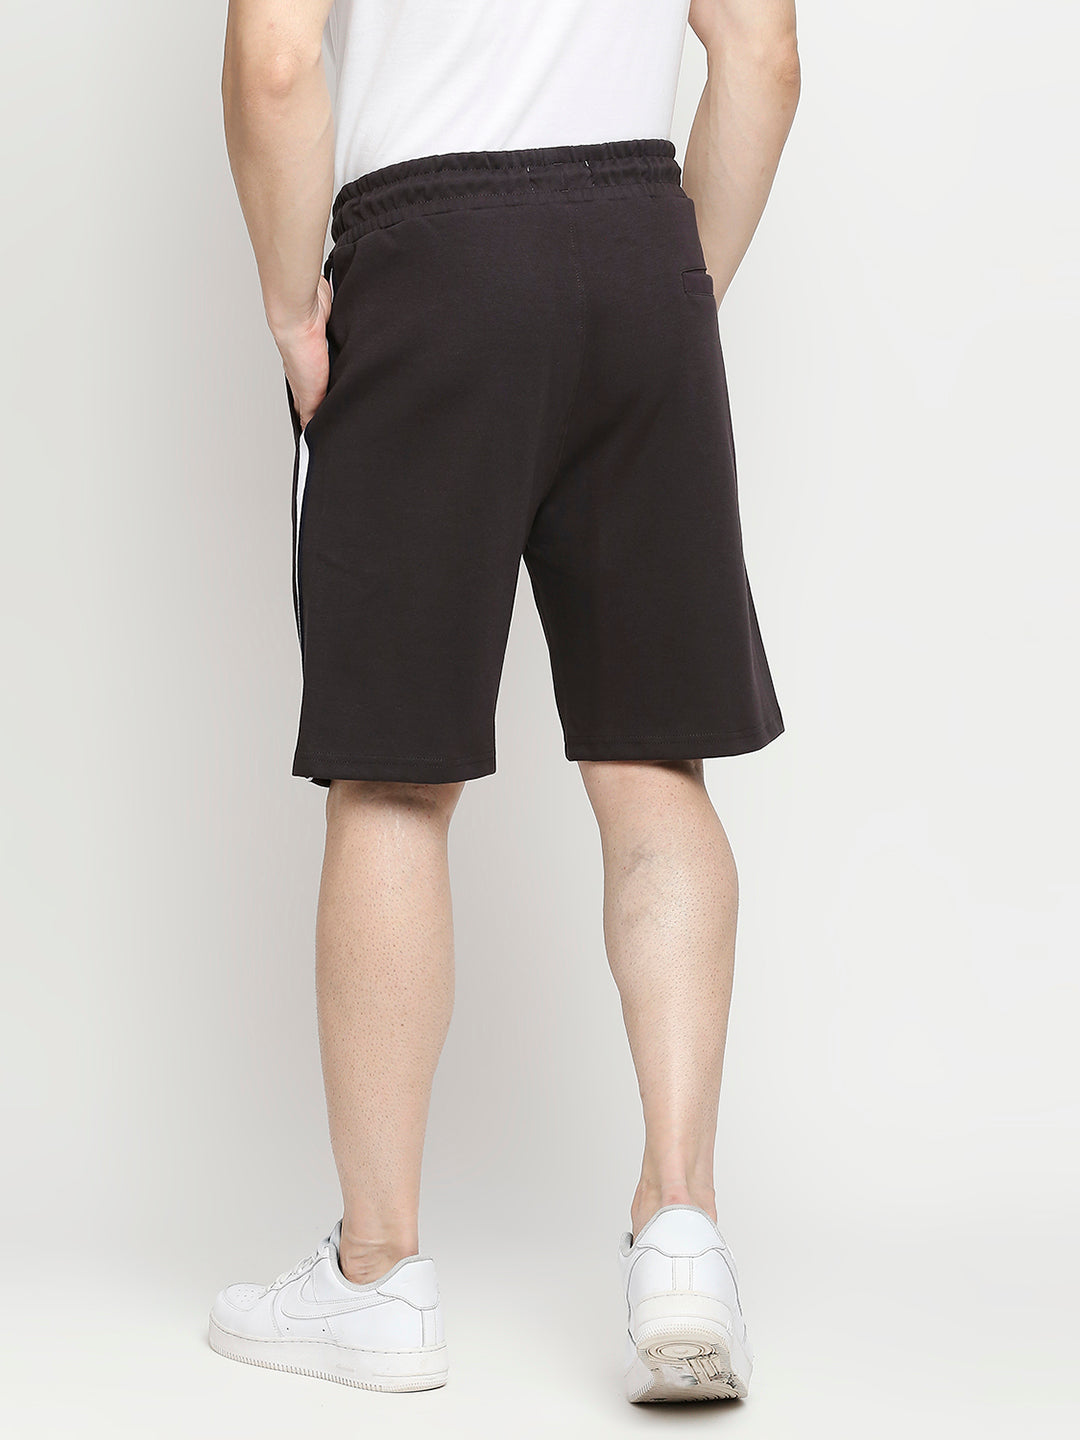 Men Cotton Blend Knitted Slate Grey Shorts- Underjeans by Spykar